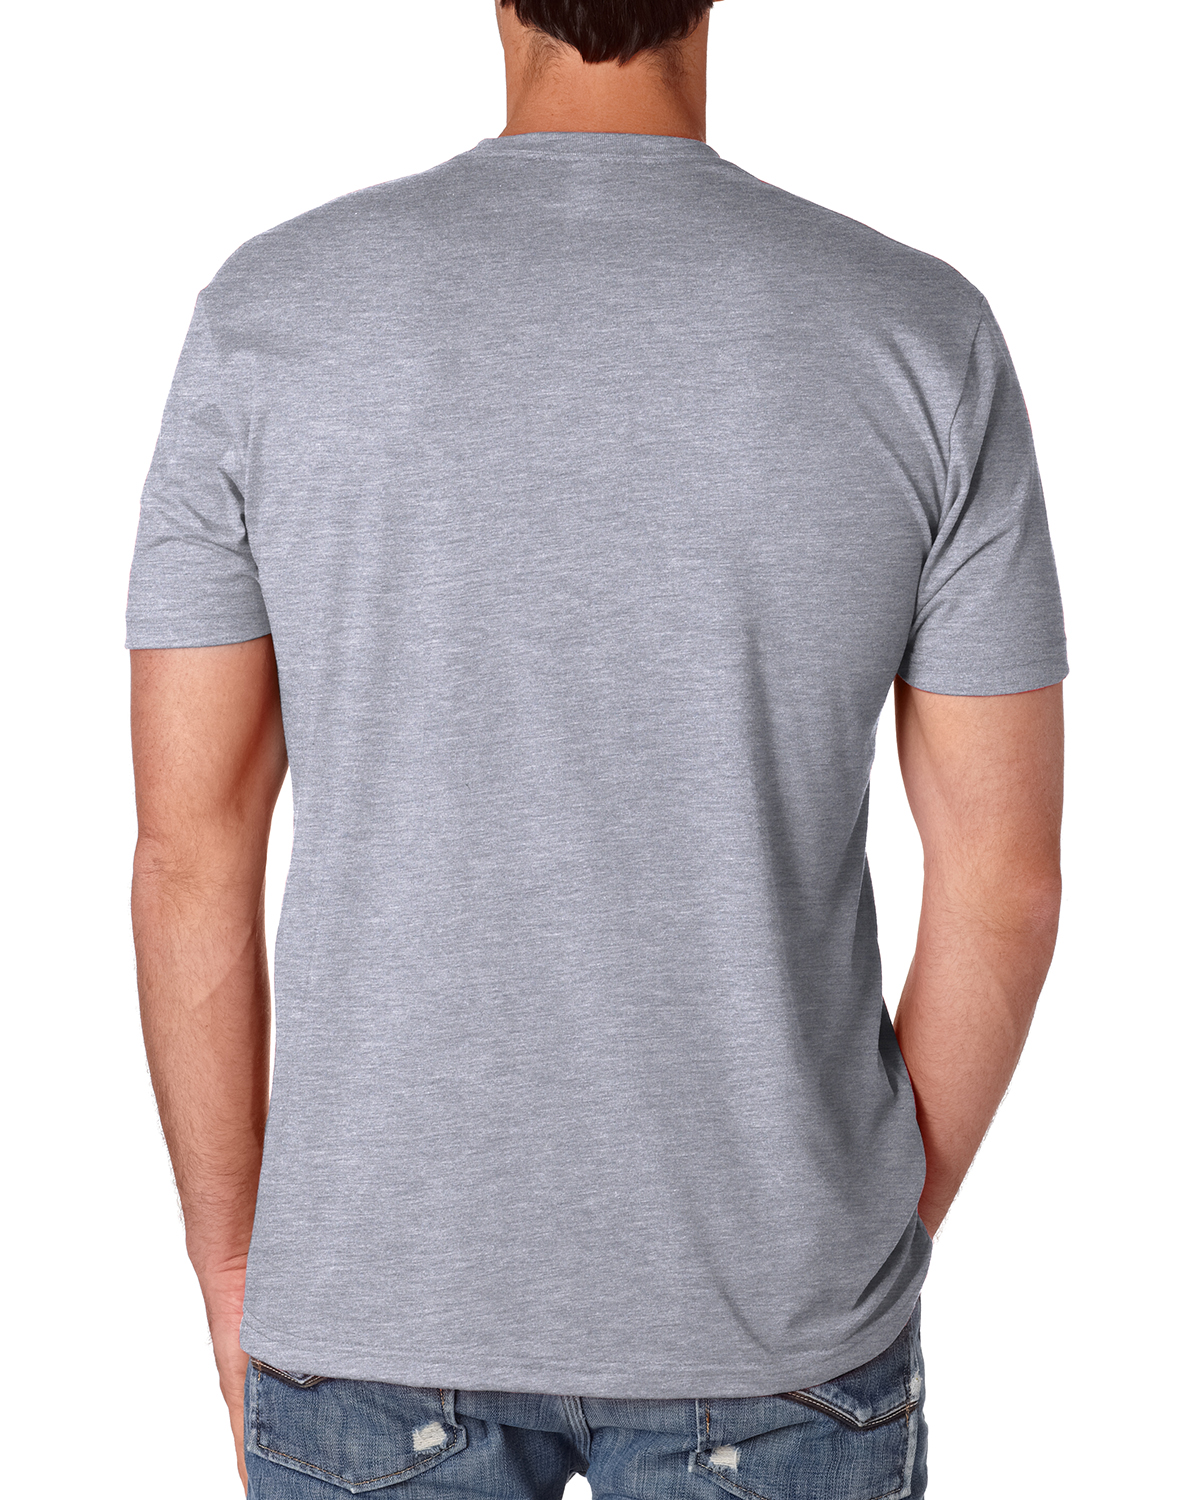 NEW Next Level Men's Premium Fitted CVC Crew XS-XL T-Shirt R-6210 | eBay